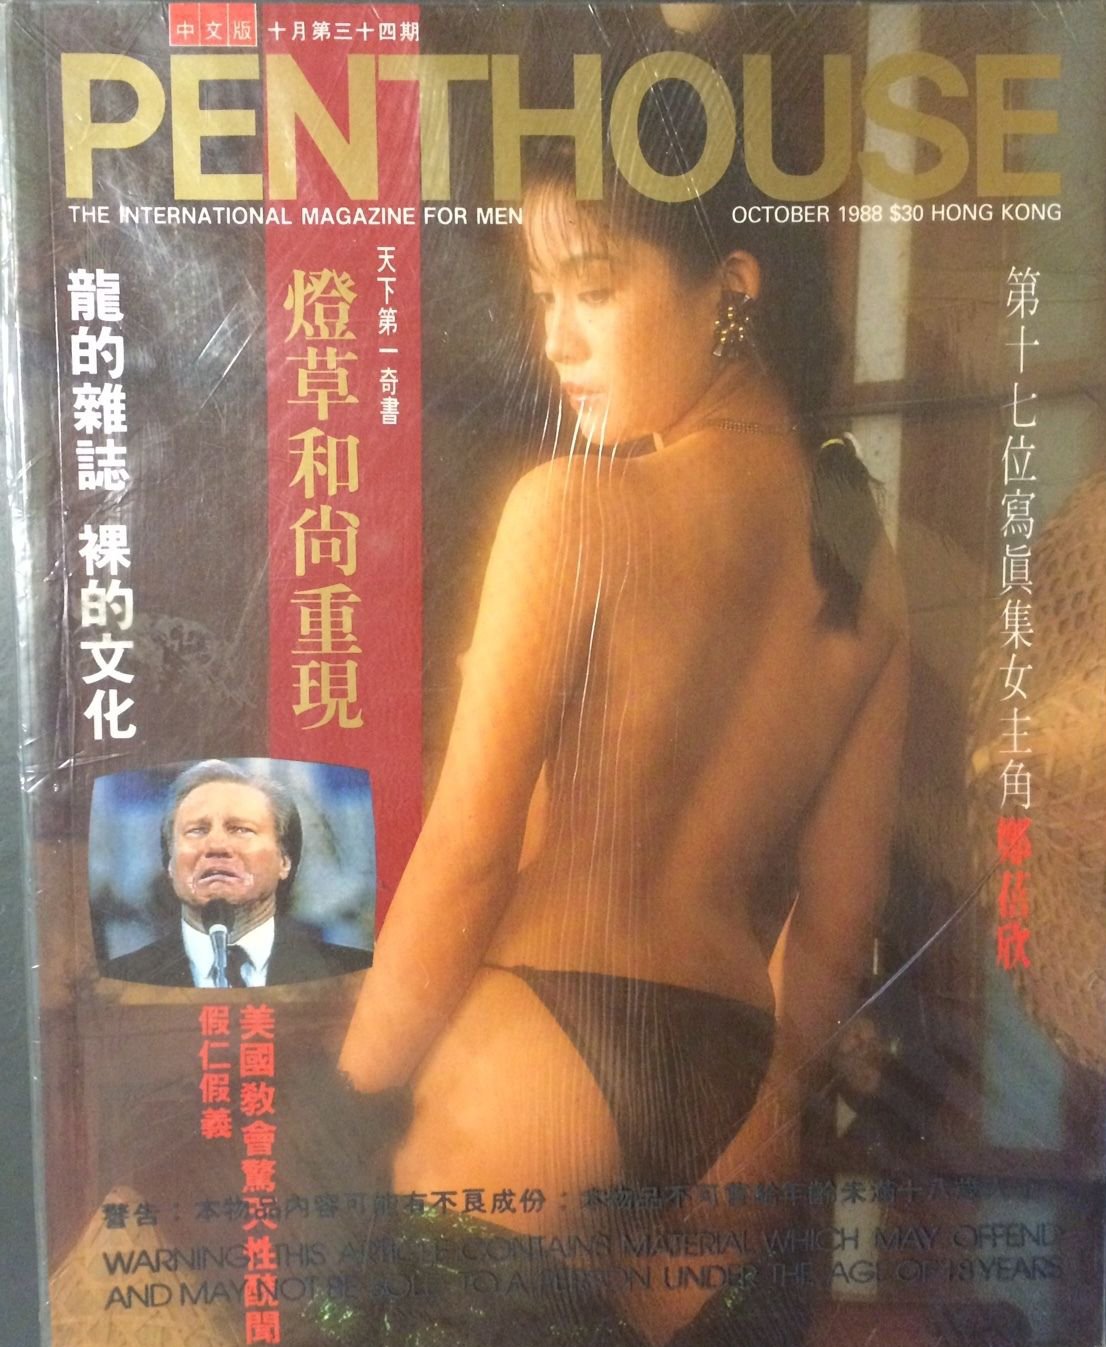 Penthouse (Hong Kong) October 1988 magazine back issue Penthouse (Hong Kong) magizine back copy Penthouse (Hong Kong) October 1988 Magazine Back Issue Published by Penthouse Publishing, Bob Guccione. The International Magazine For Men.